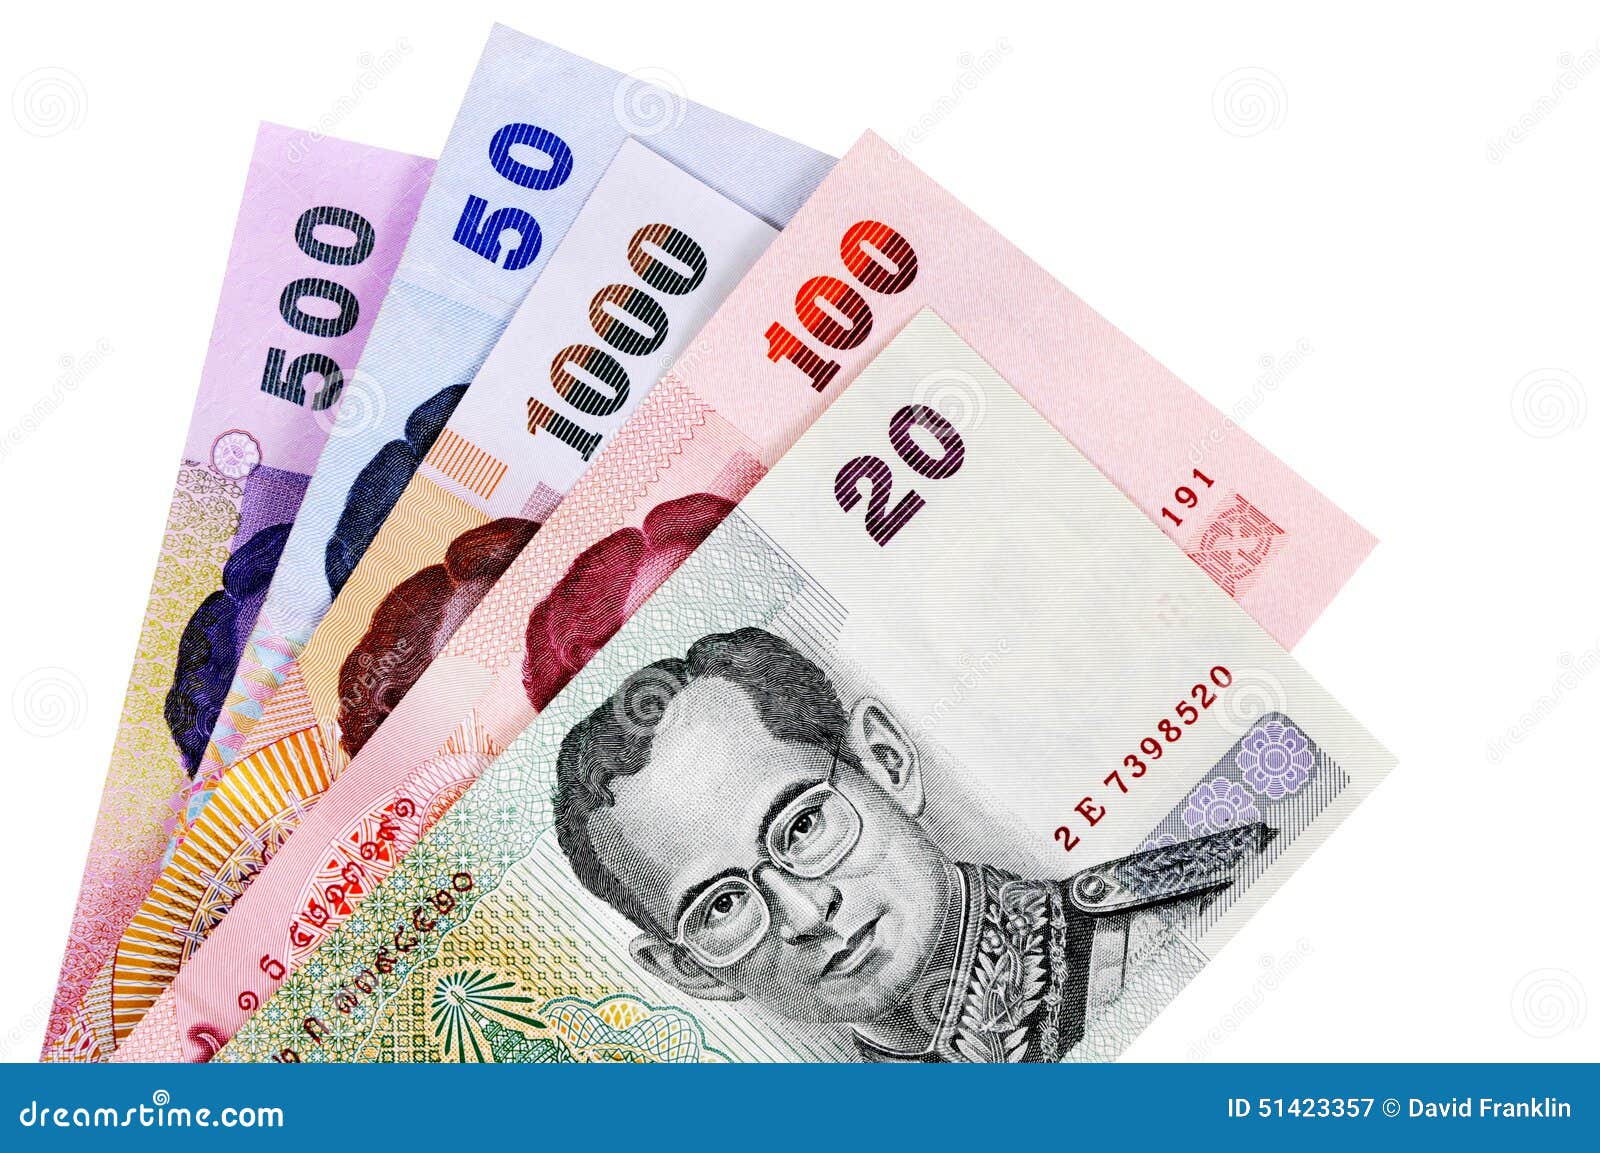 Евро или доллар в тайланде. Тайский бат. Баты купюры. Бат денежная единица Таиланда. Тайланд картинка валюты.